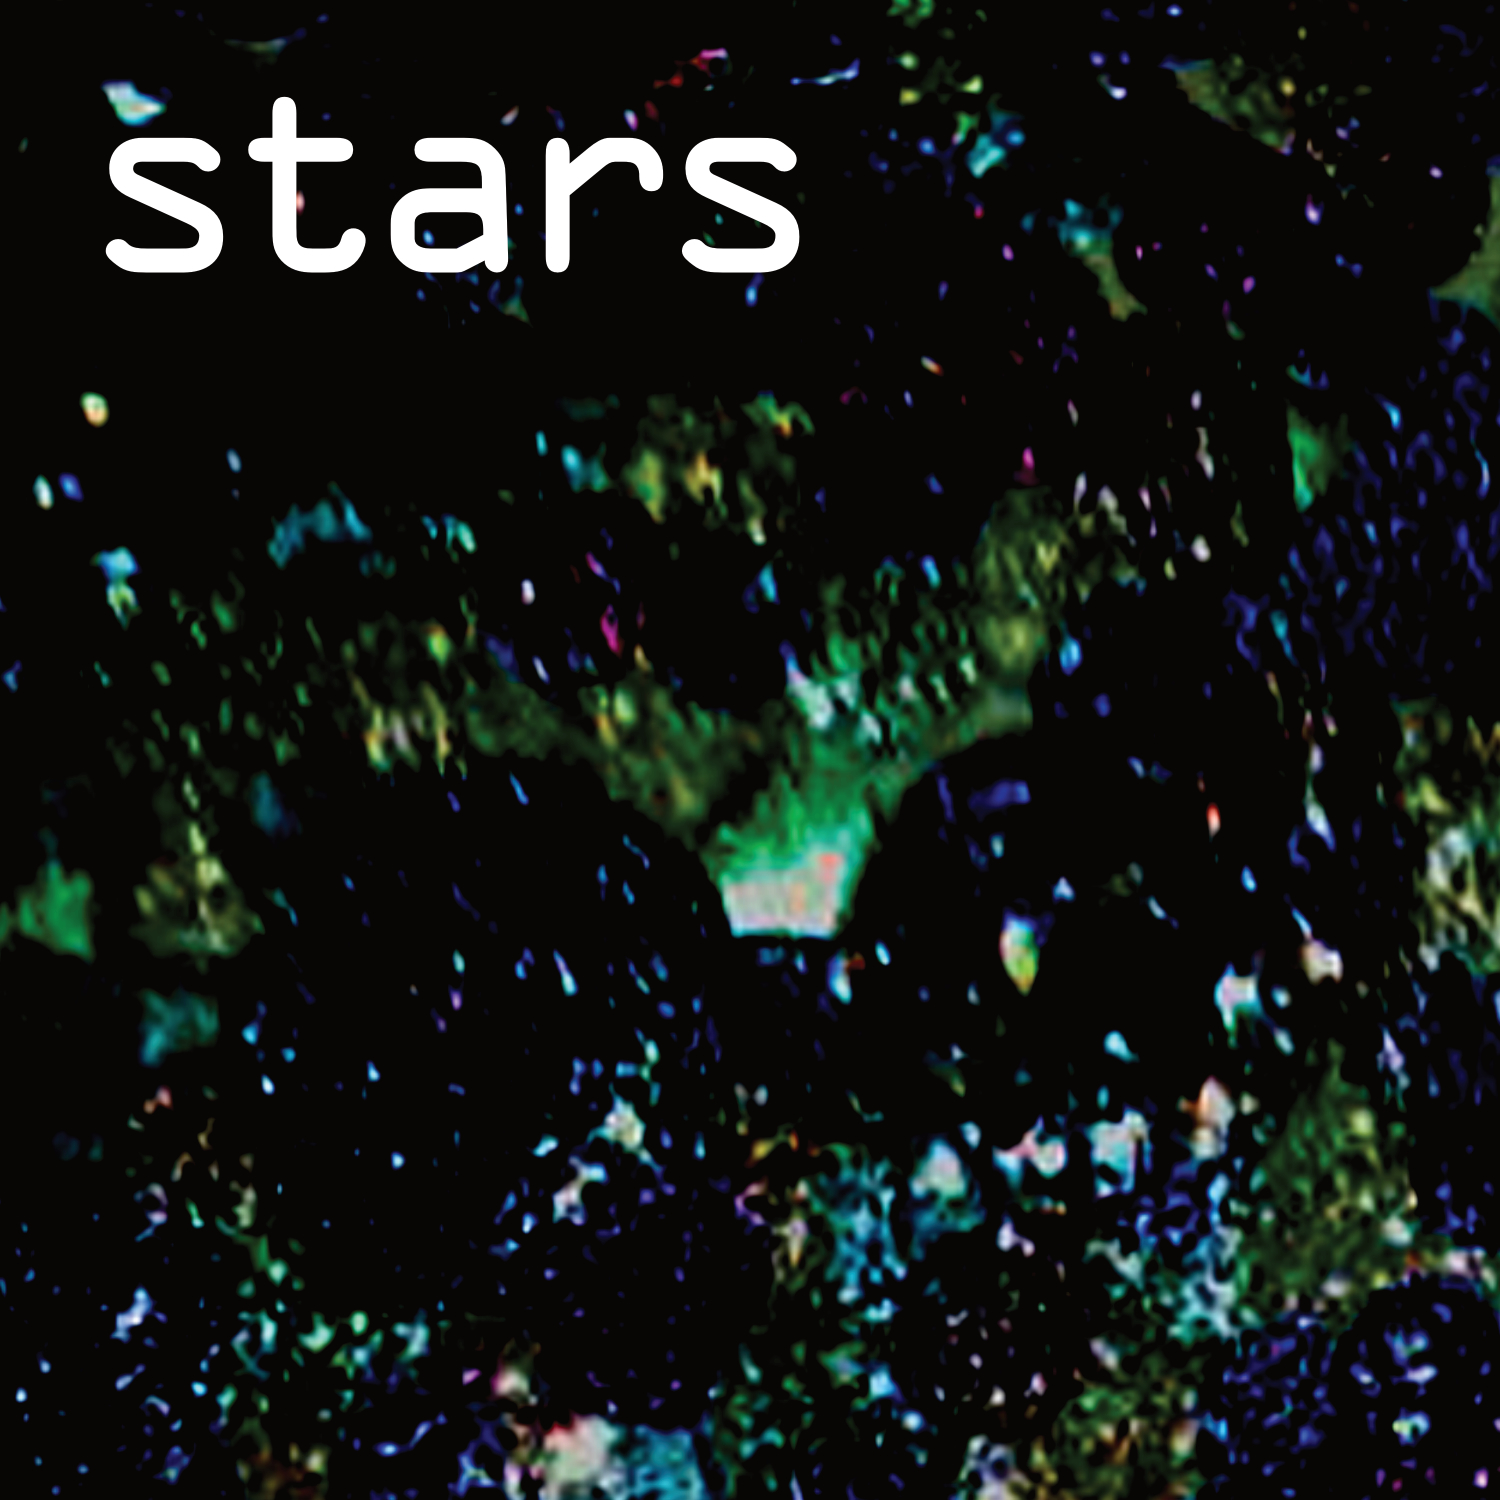 Stars artwork